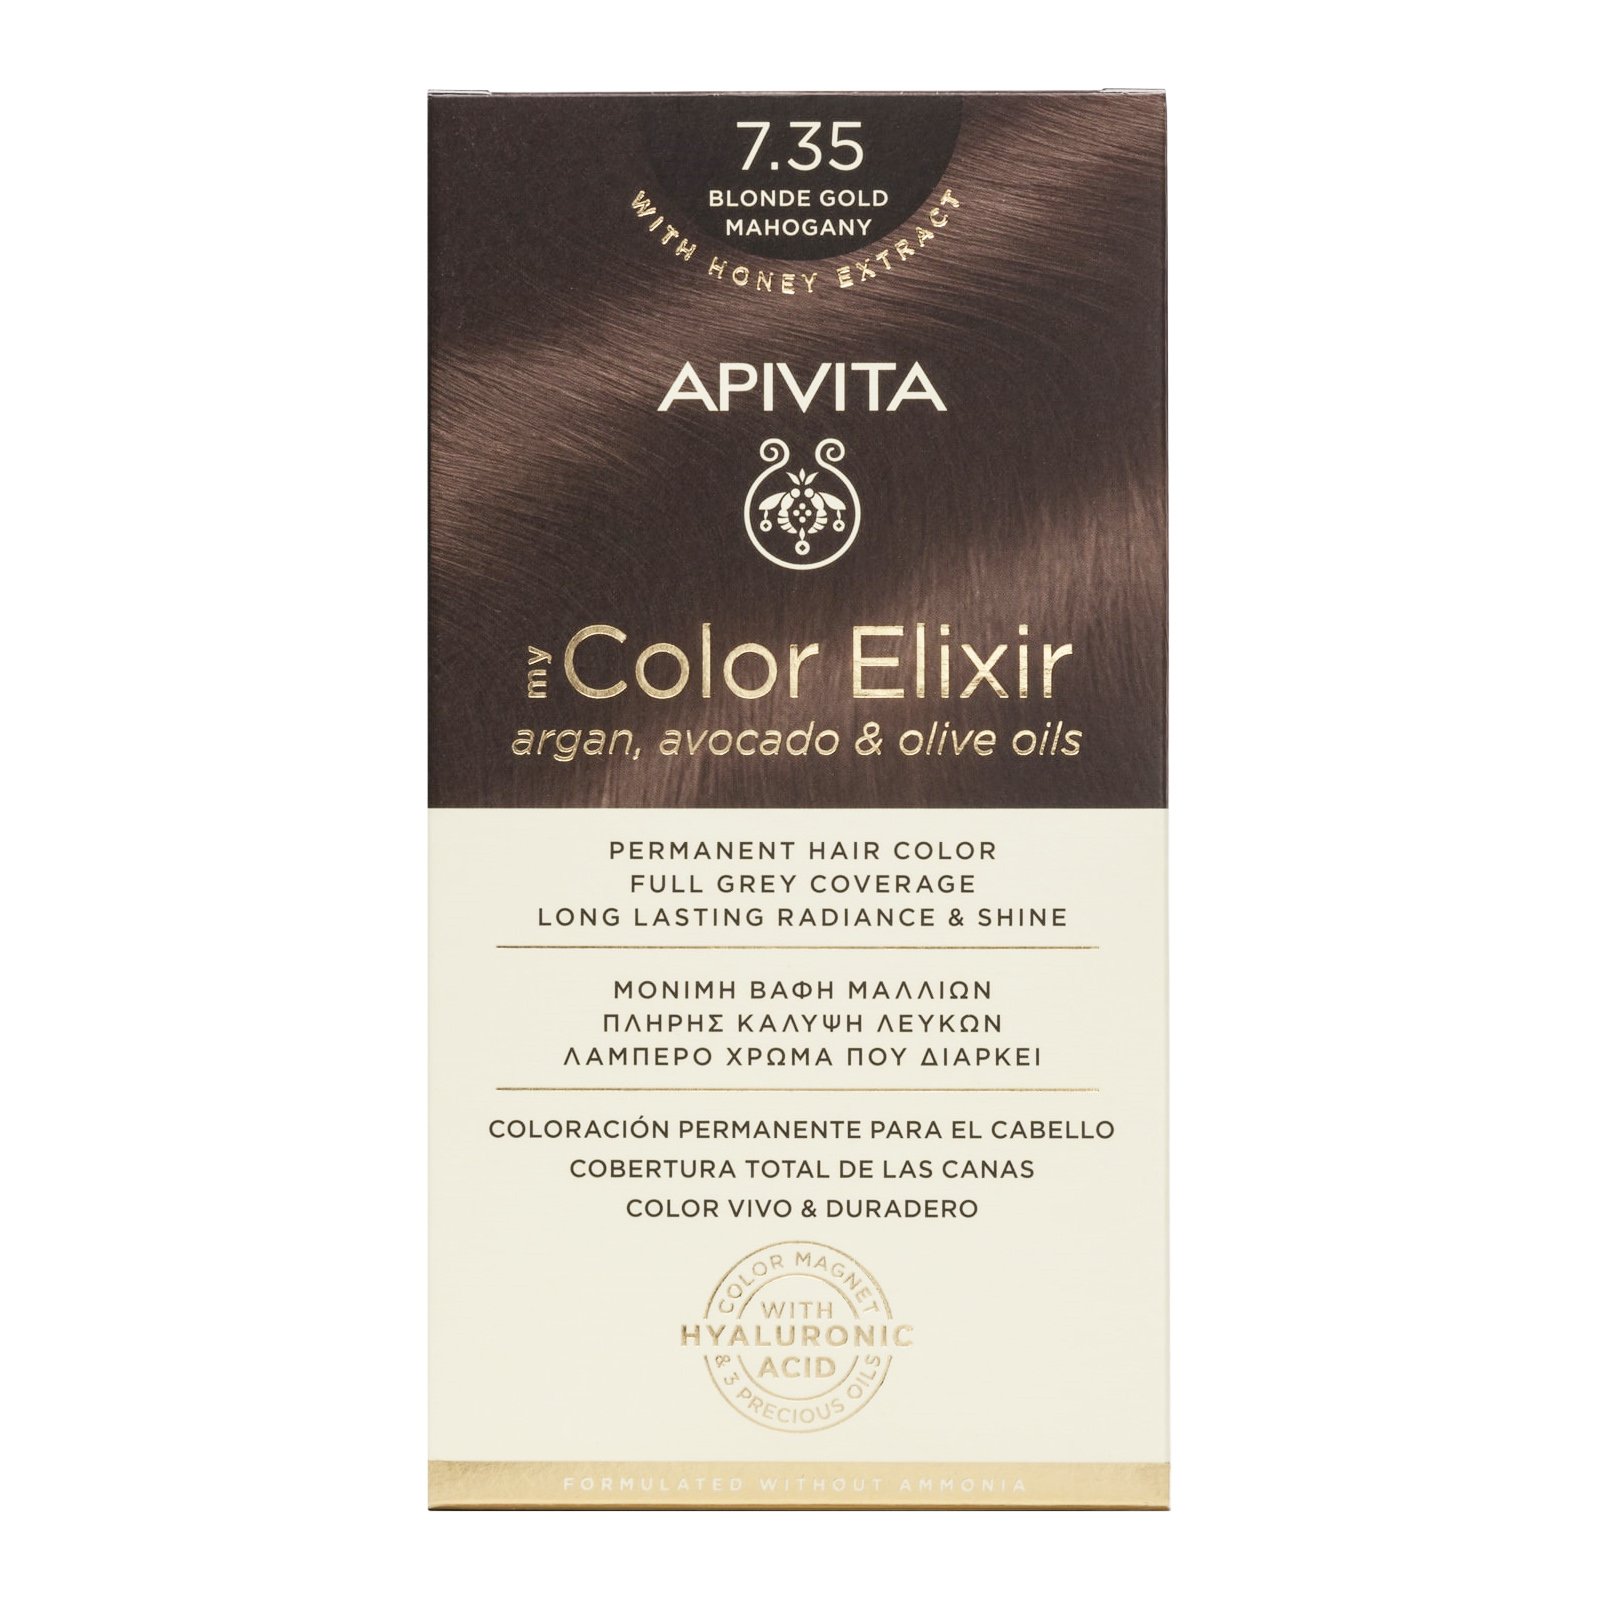 Apivita My Color Elixir Μόνιμη Βαφή Μαλλιών με Καινοτόμο Σύστημα Color Magnet που Σταθεροποιεί και Σφραγίζει το Χρώμα στην Τρίχα – N7.35 ΞΑΝΘΟ ΜΕΛΙ ΜΑΟΝΙ